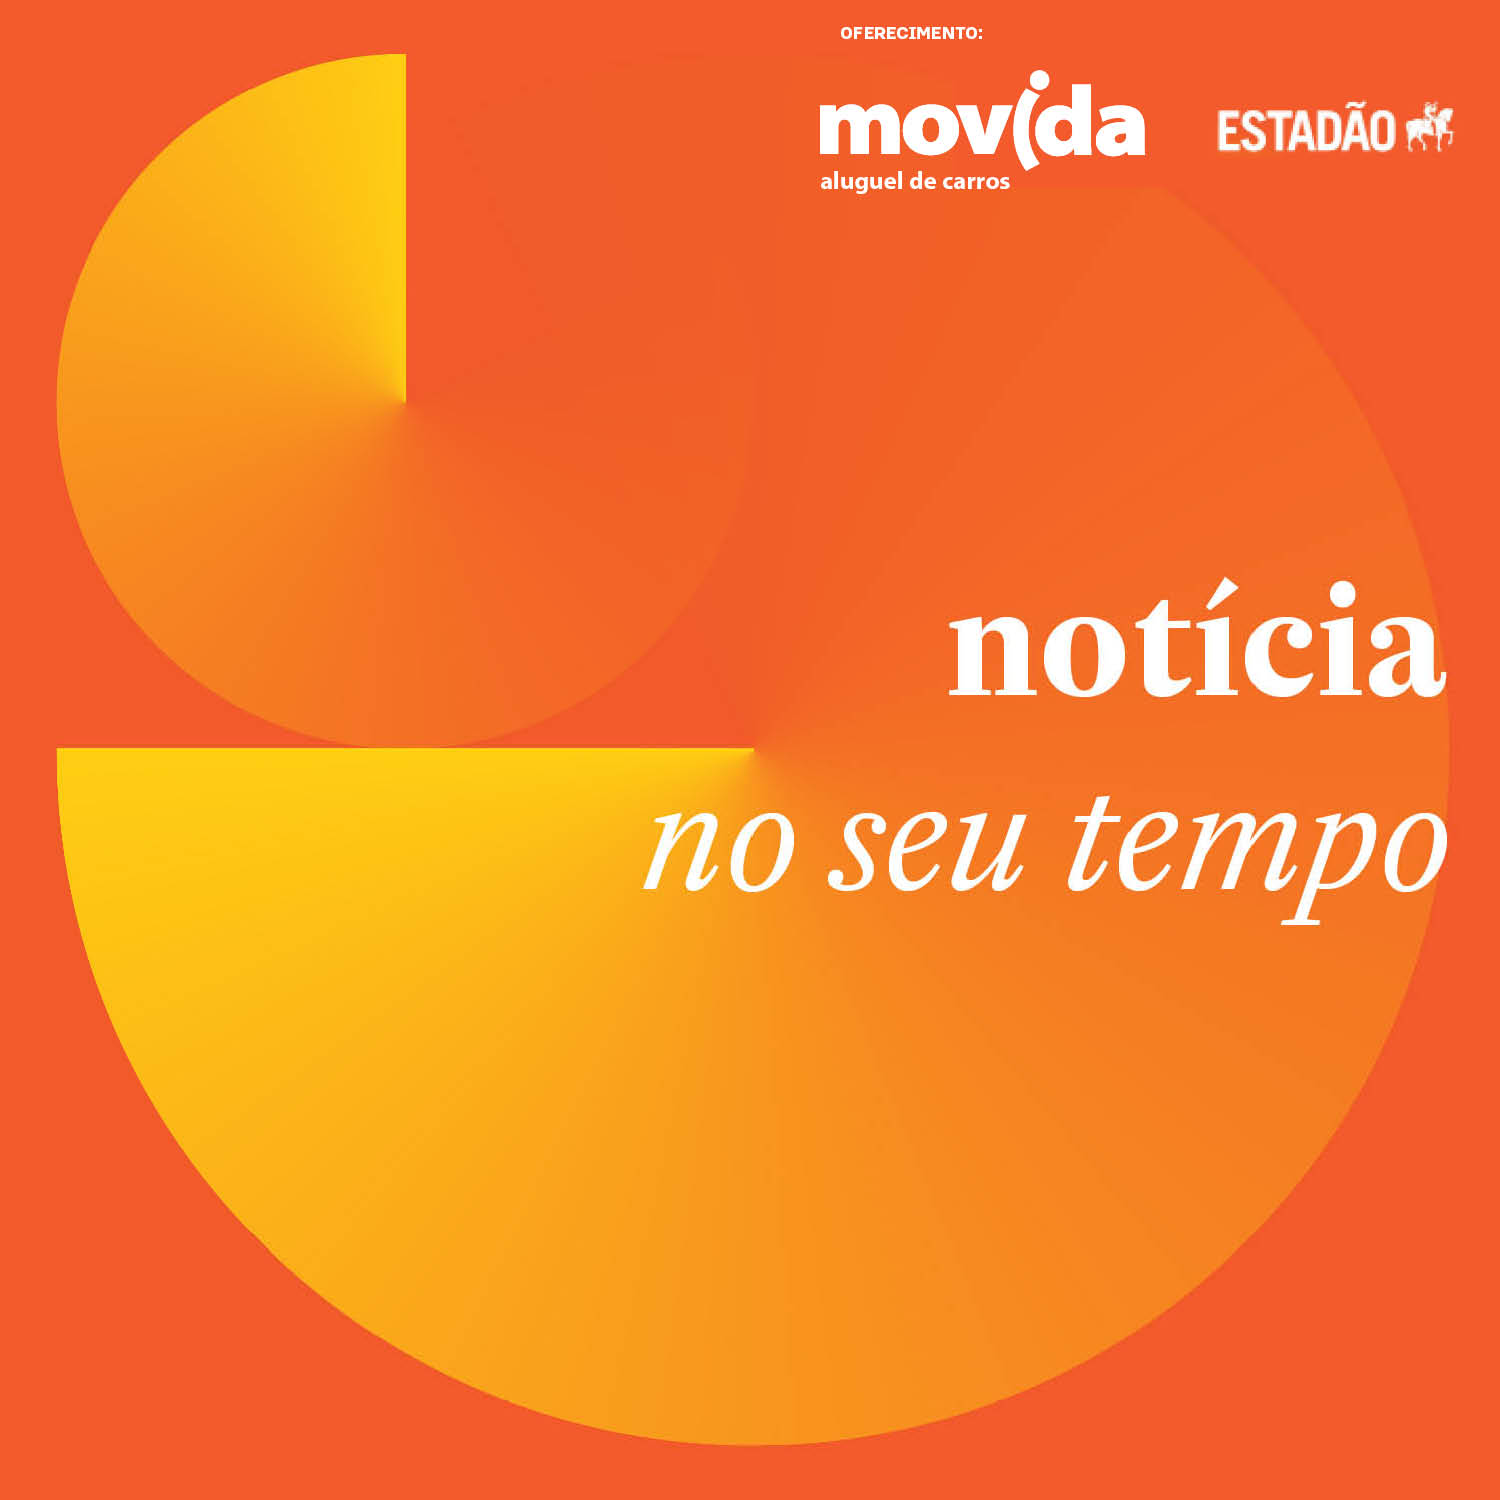 ‘Chega de frescura e mimimi’, diz Bolsonaro sobre pandemia